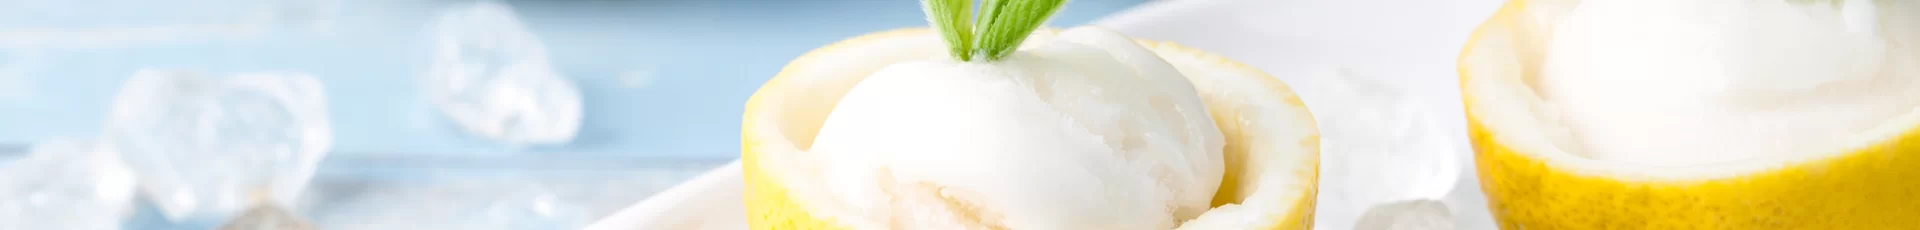 Recipe of the Month: Fresh Lemon Ice Cream with Crystallized Lemon Peel